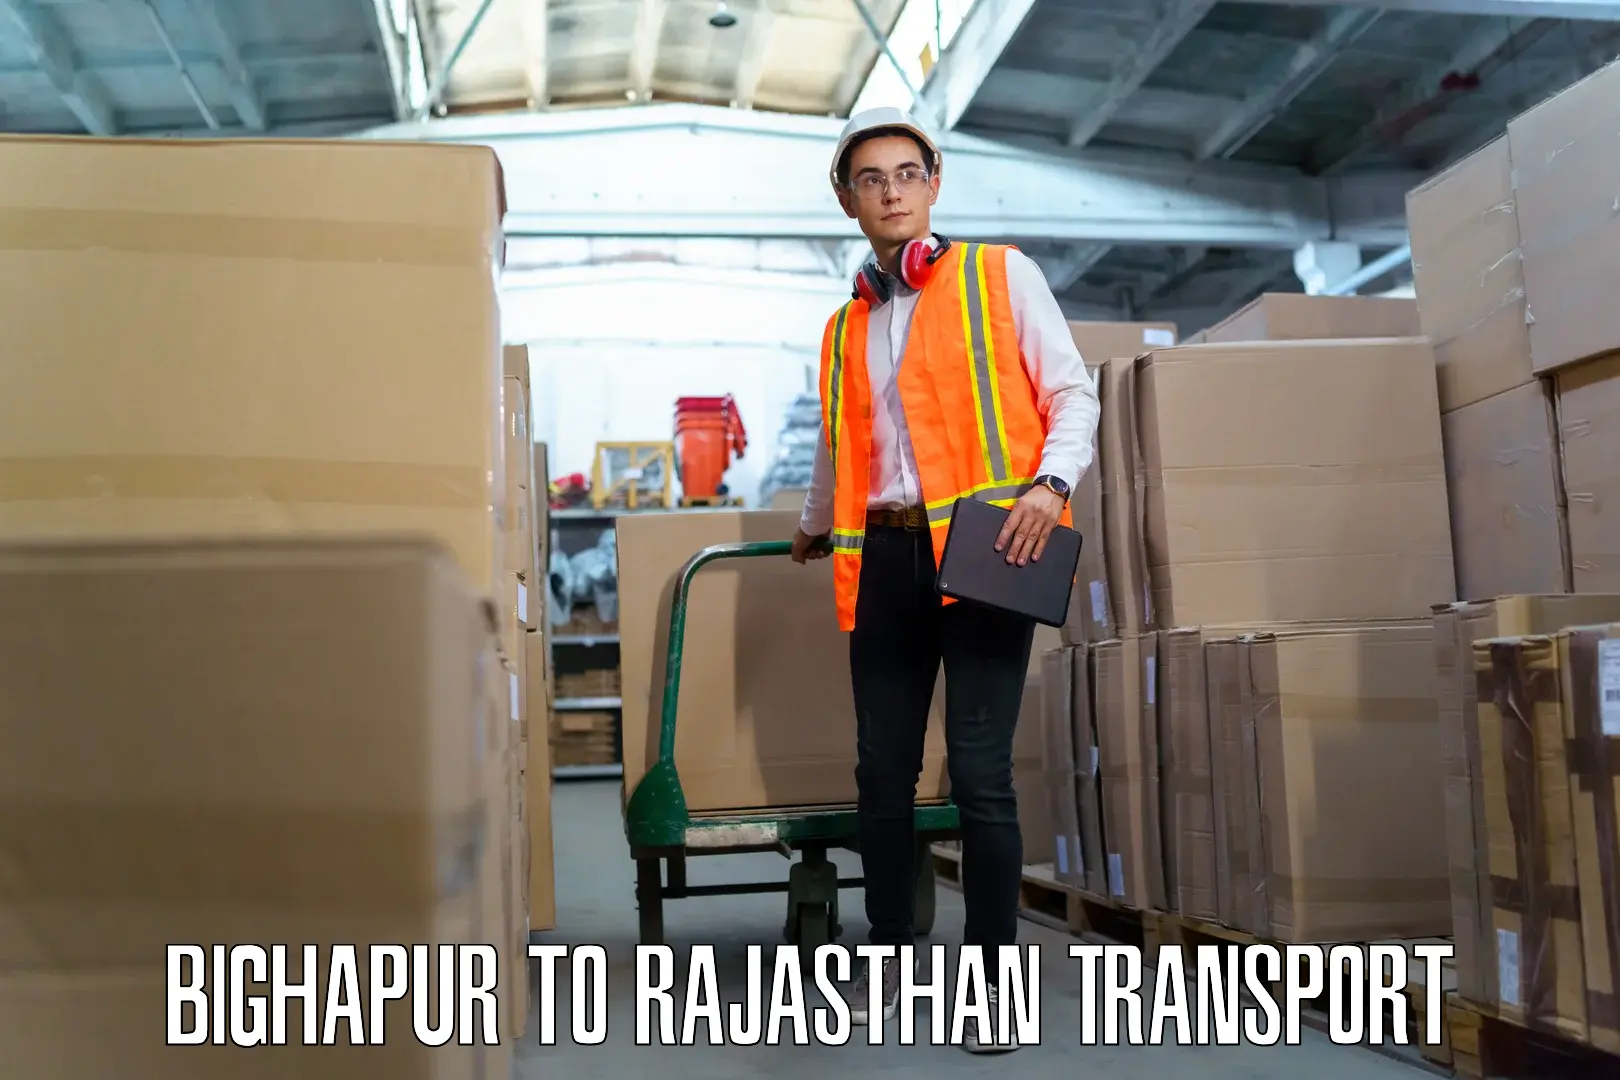 Online transport service Bighapur to Rajasthan